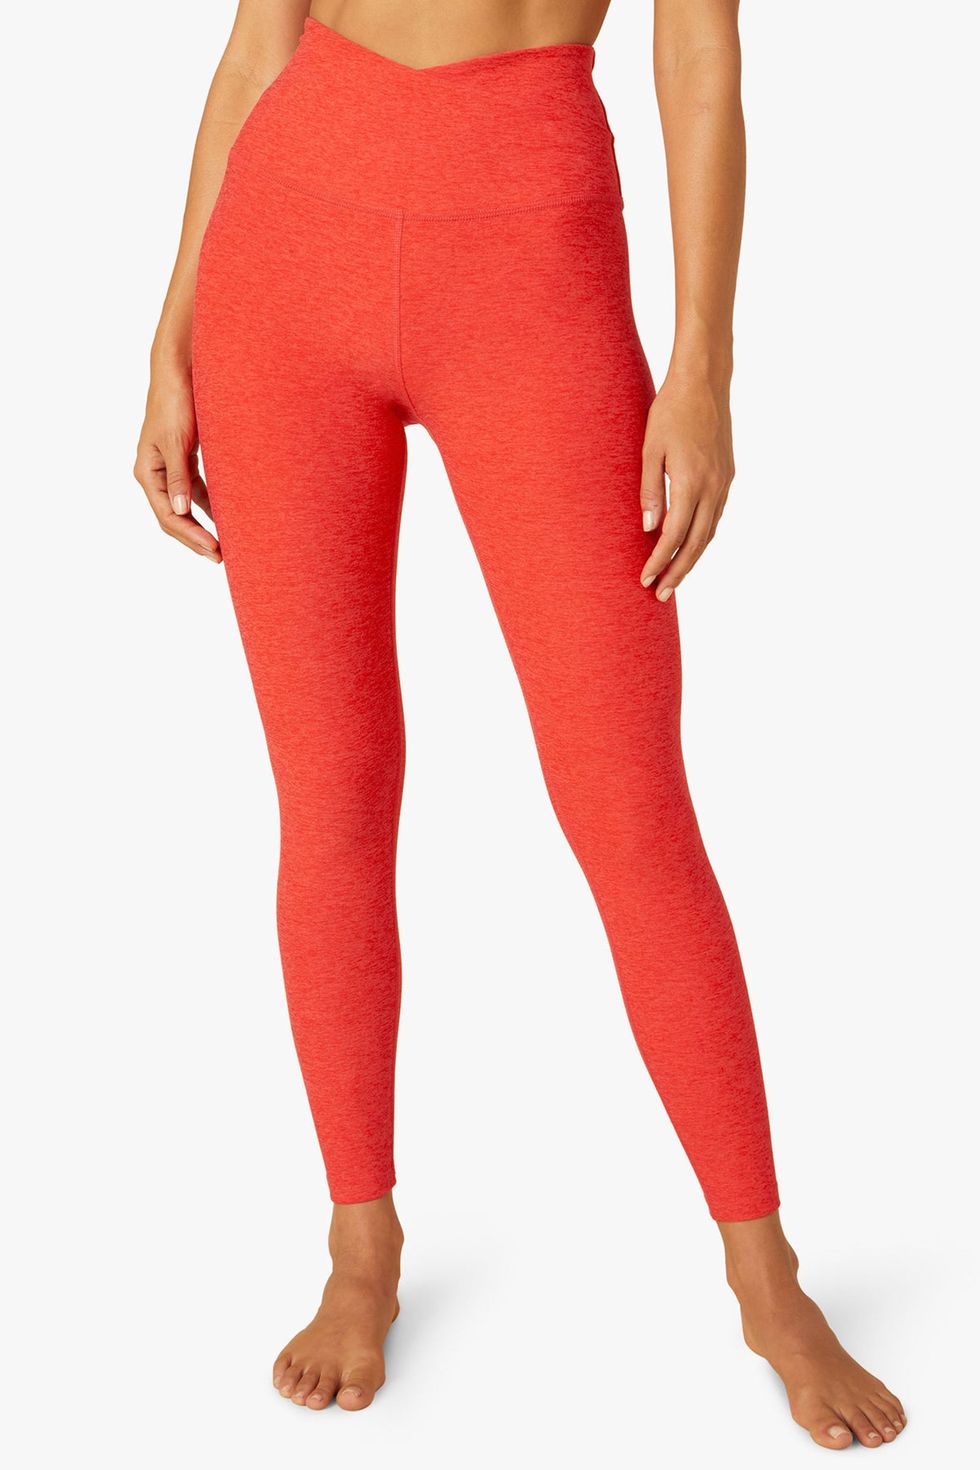 Solid Hot Red Yoga Pants  Red yoga pants, Comfortable yoga pants